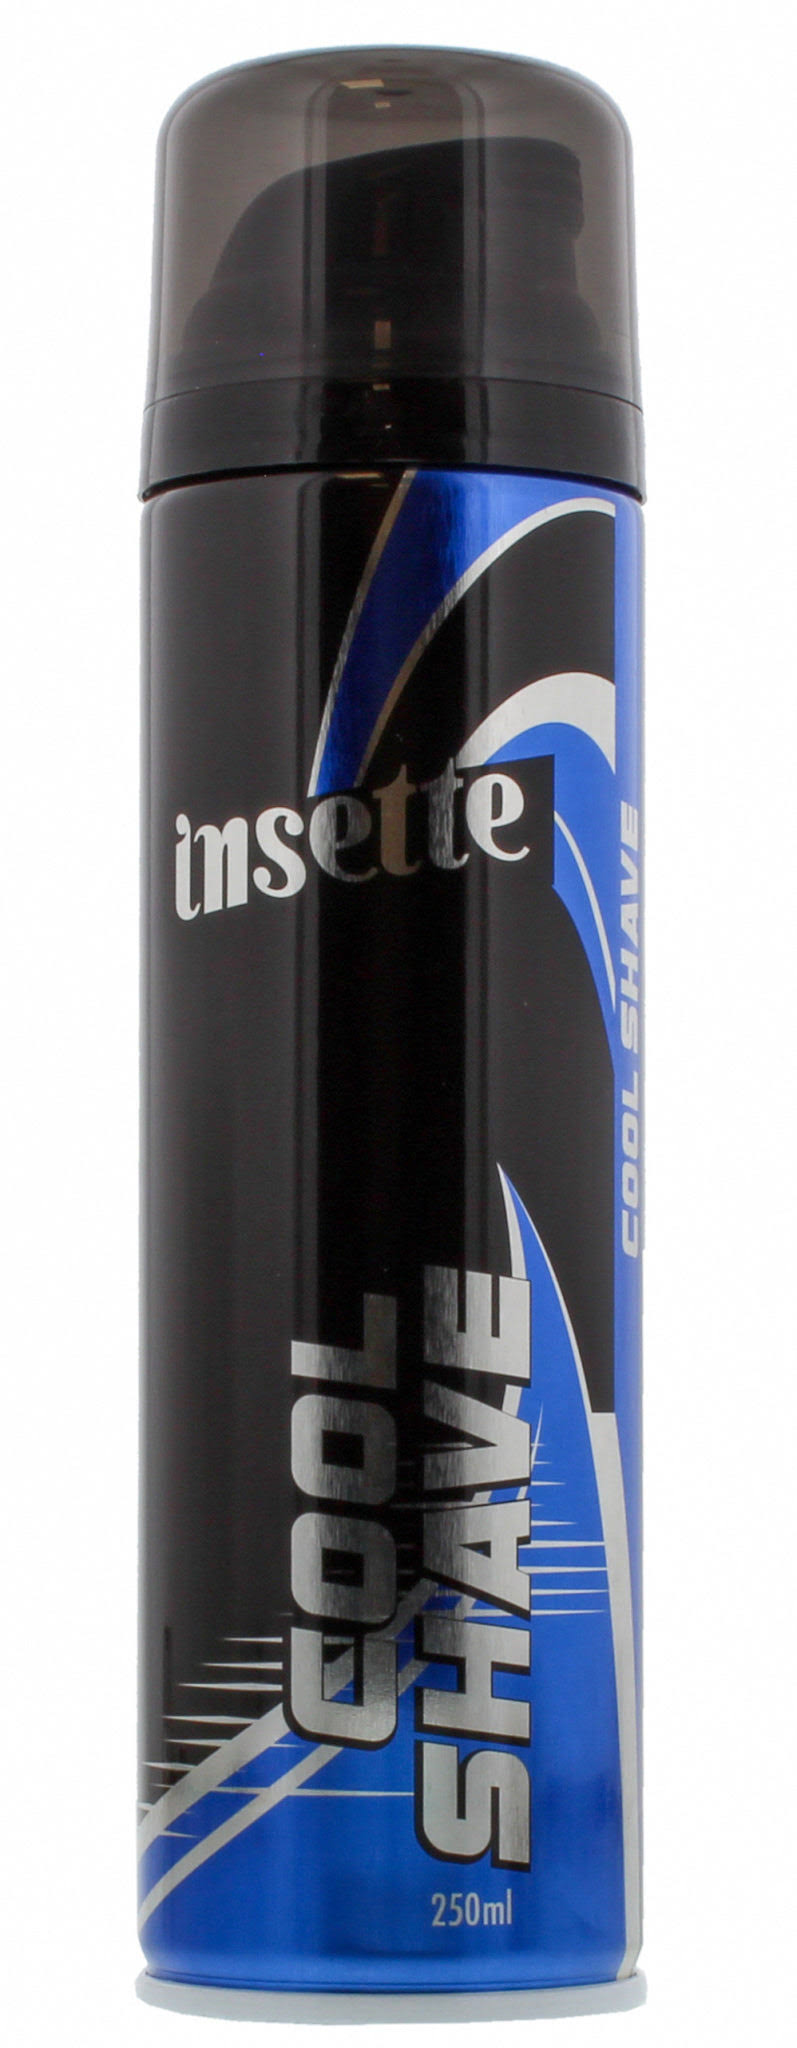 Insette Cool Shave Foam, 250ml